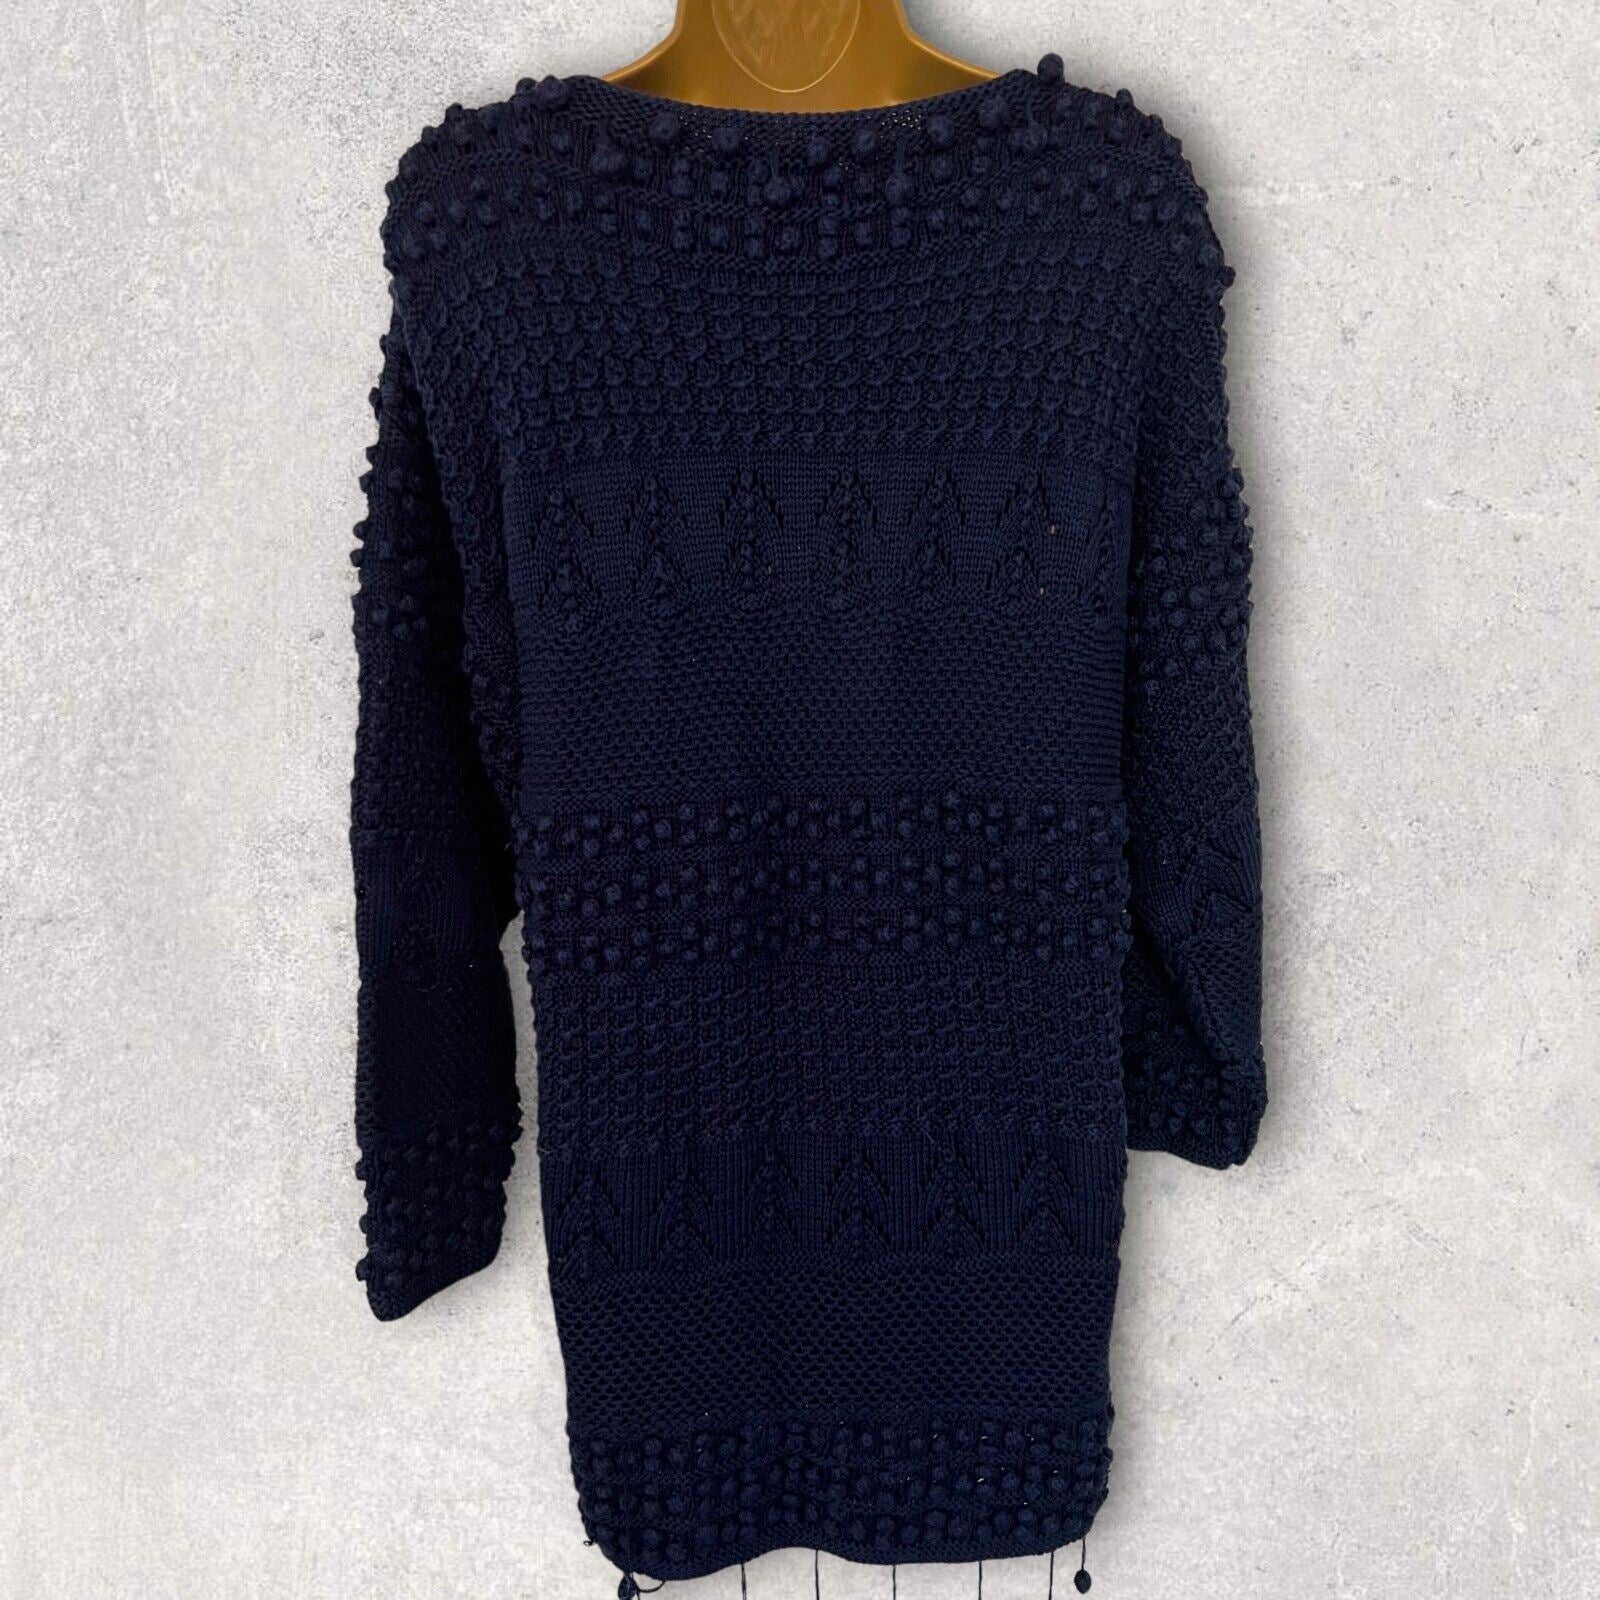 Pashtie by Alphaka Vintage Navy Heavy Knit Jumper Size M Approx UK 14 US 10 EU 42 Timeless Fashions